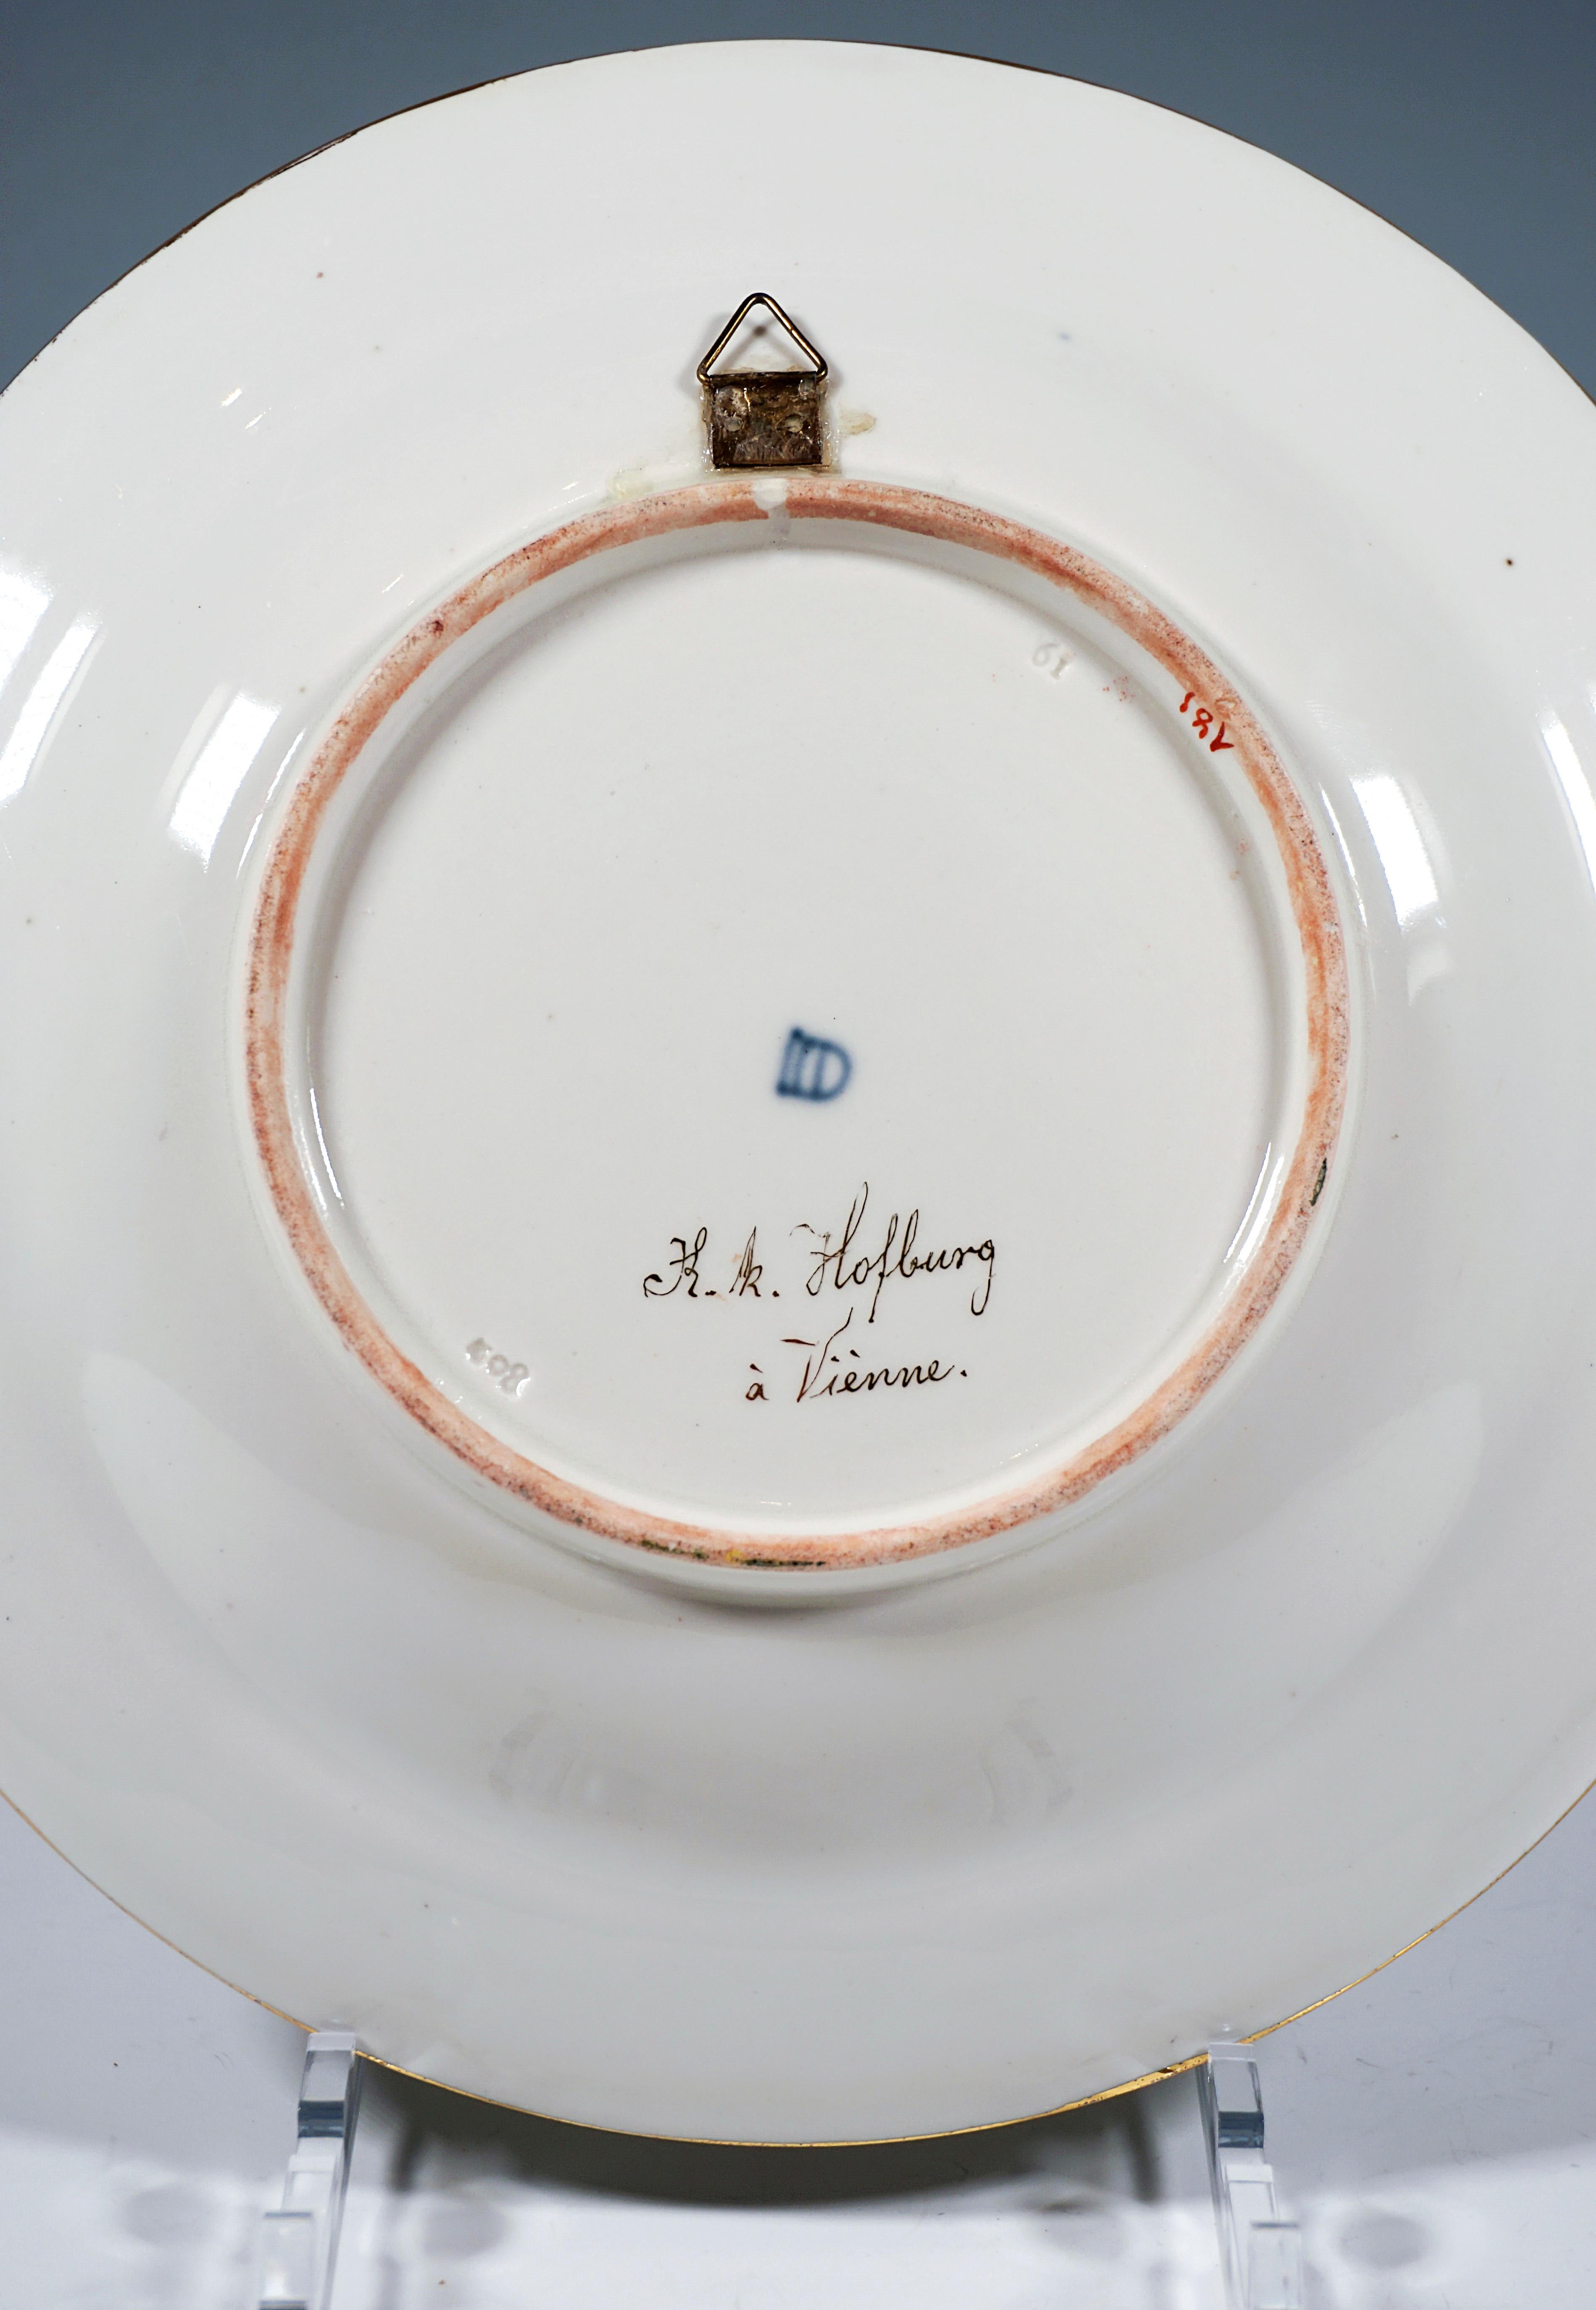 Hand-Crafted Viennese Imperial Porcelain Splendour Plate, 'K.k. Hofburg Á Vienne', 1802 For Sale